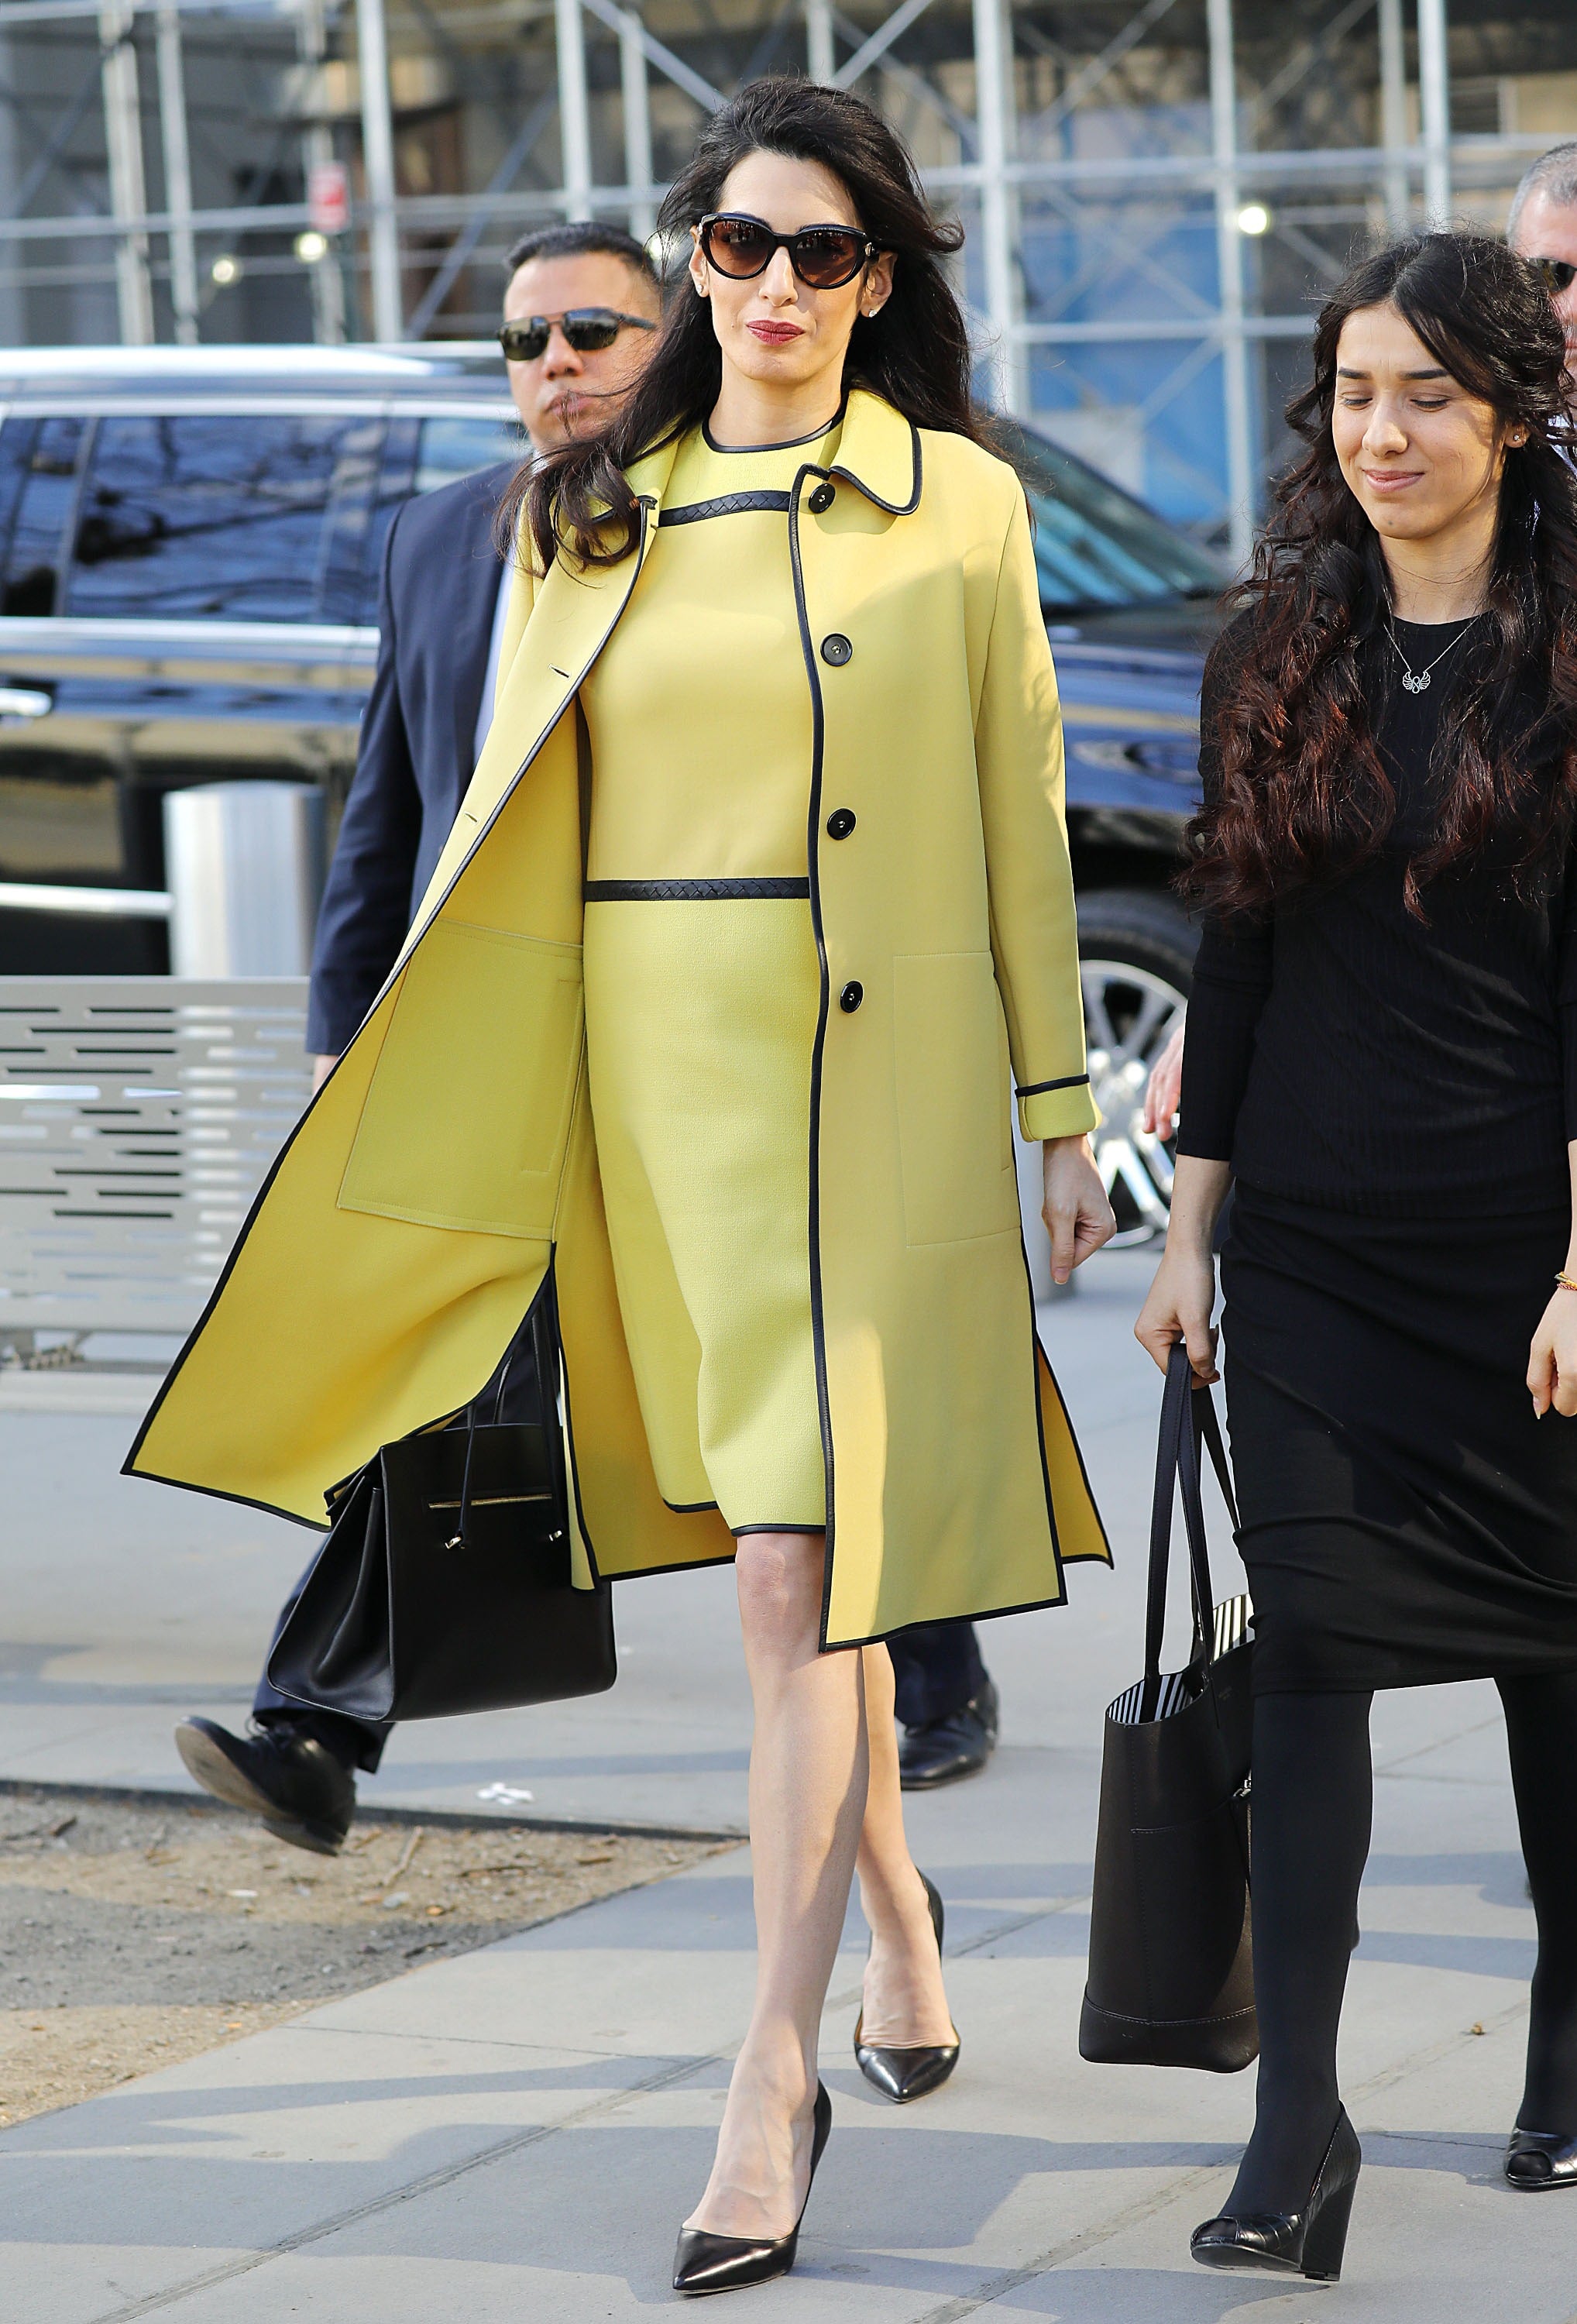 yellow dress coat